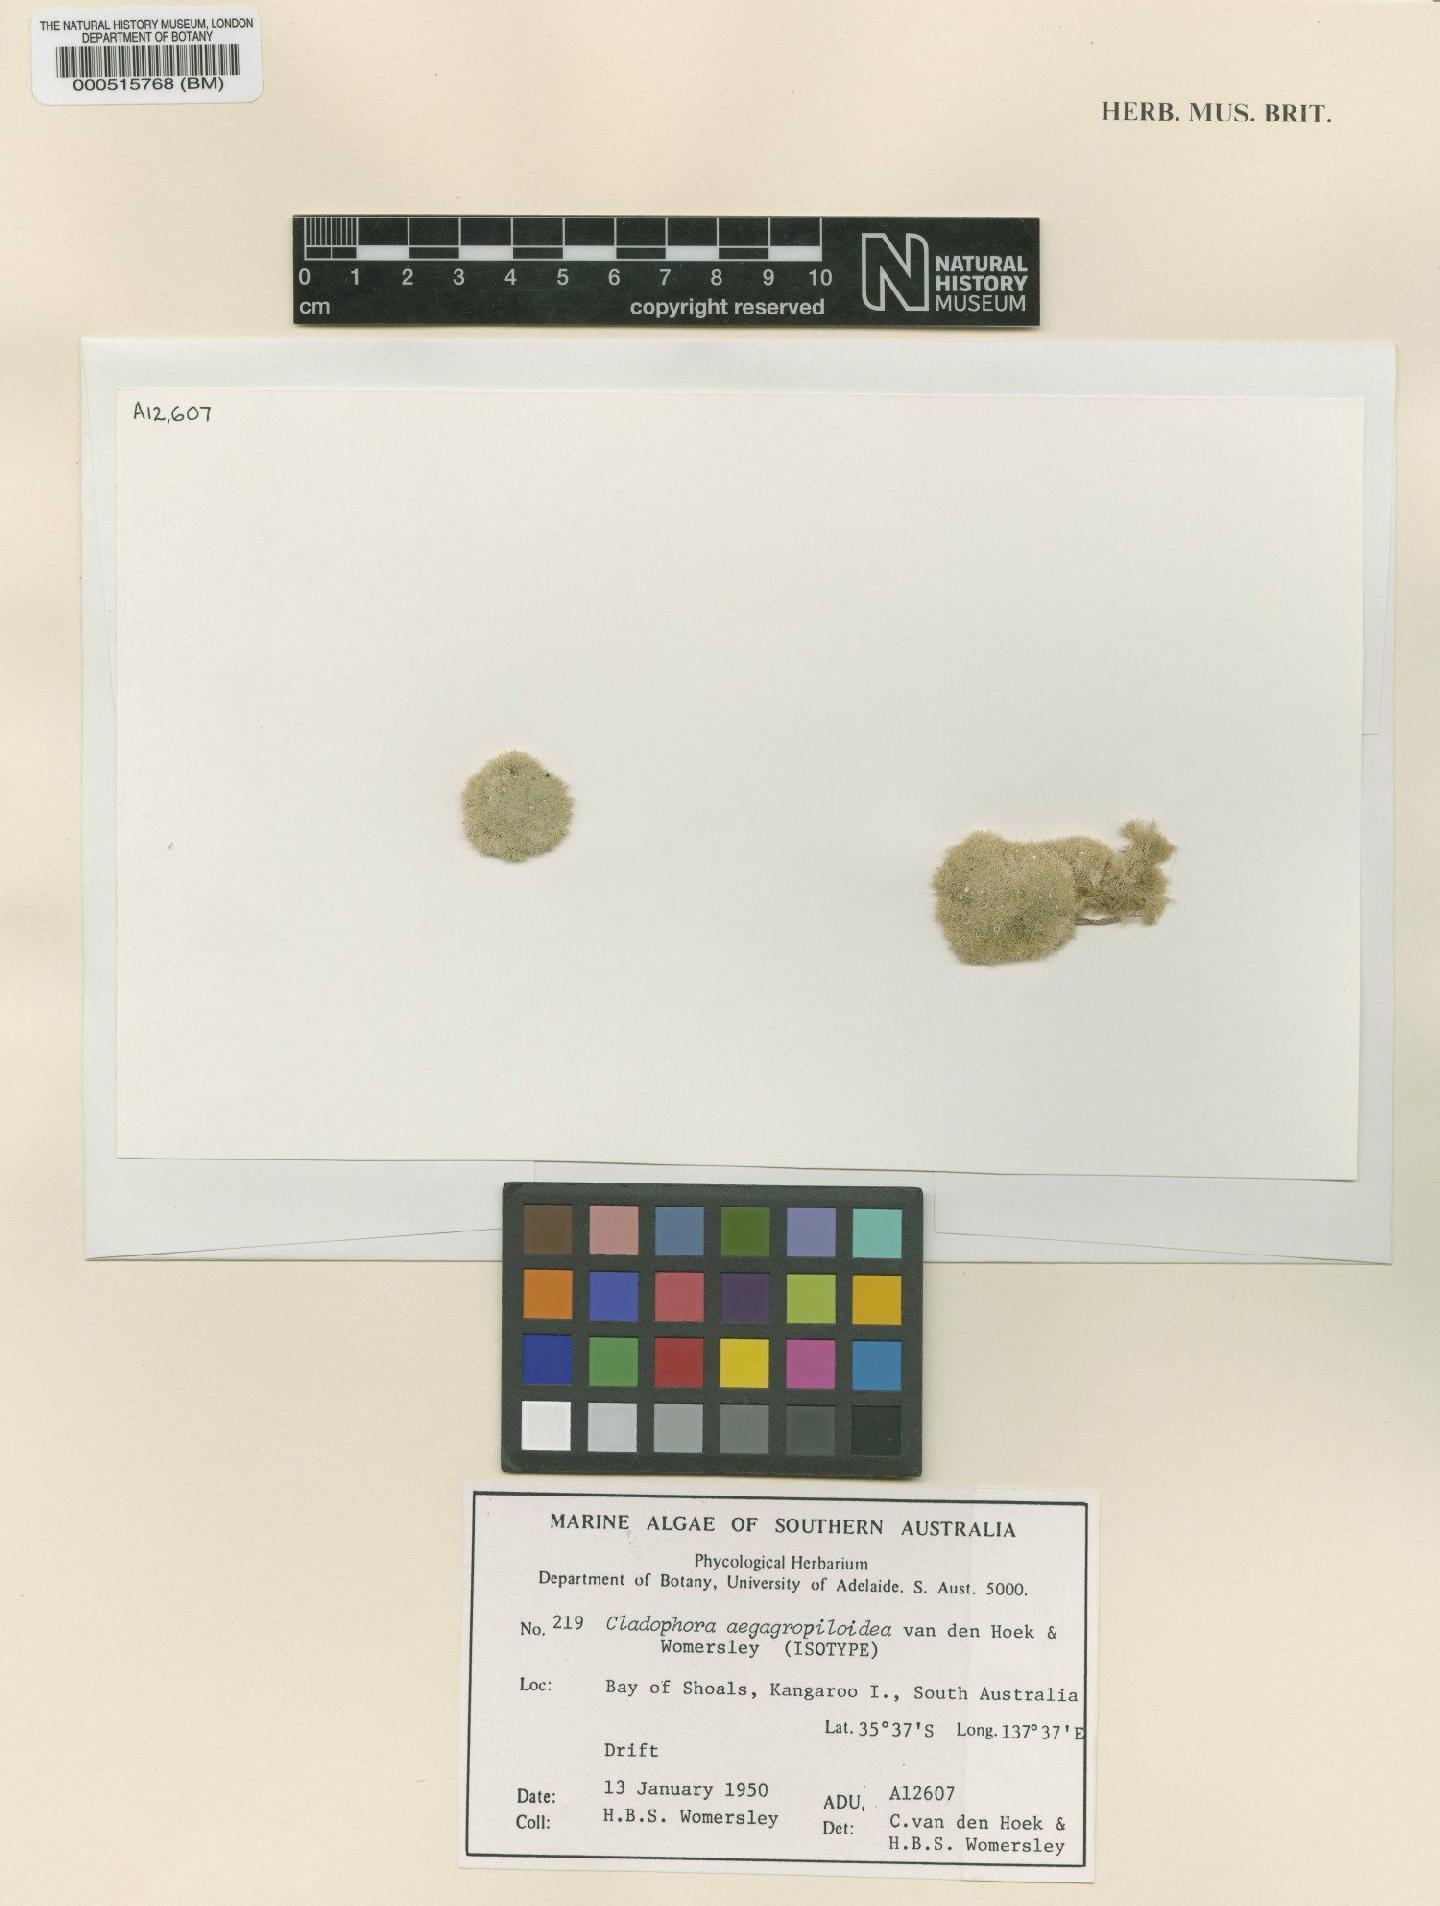 To NHMUK collection (Cladophora aegagropiloidea C.Hoek & Womersley; Type; NHMUK:ecatalogue:4830131)